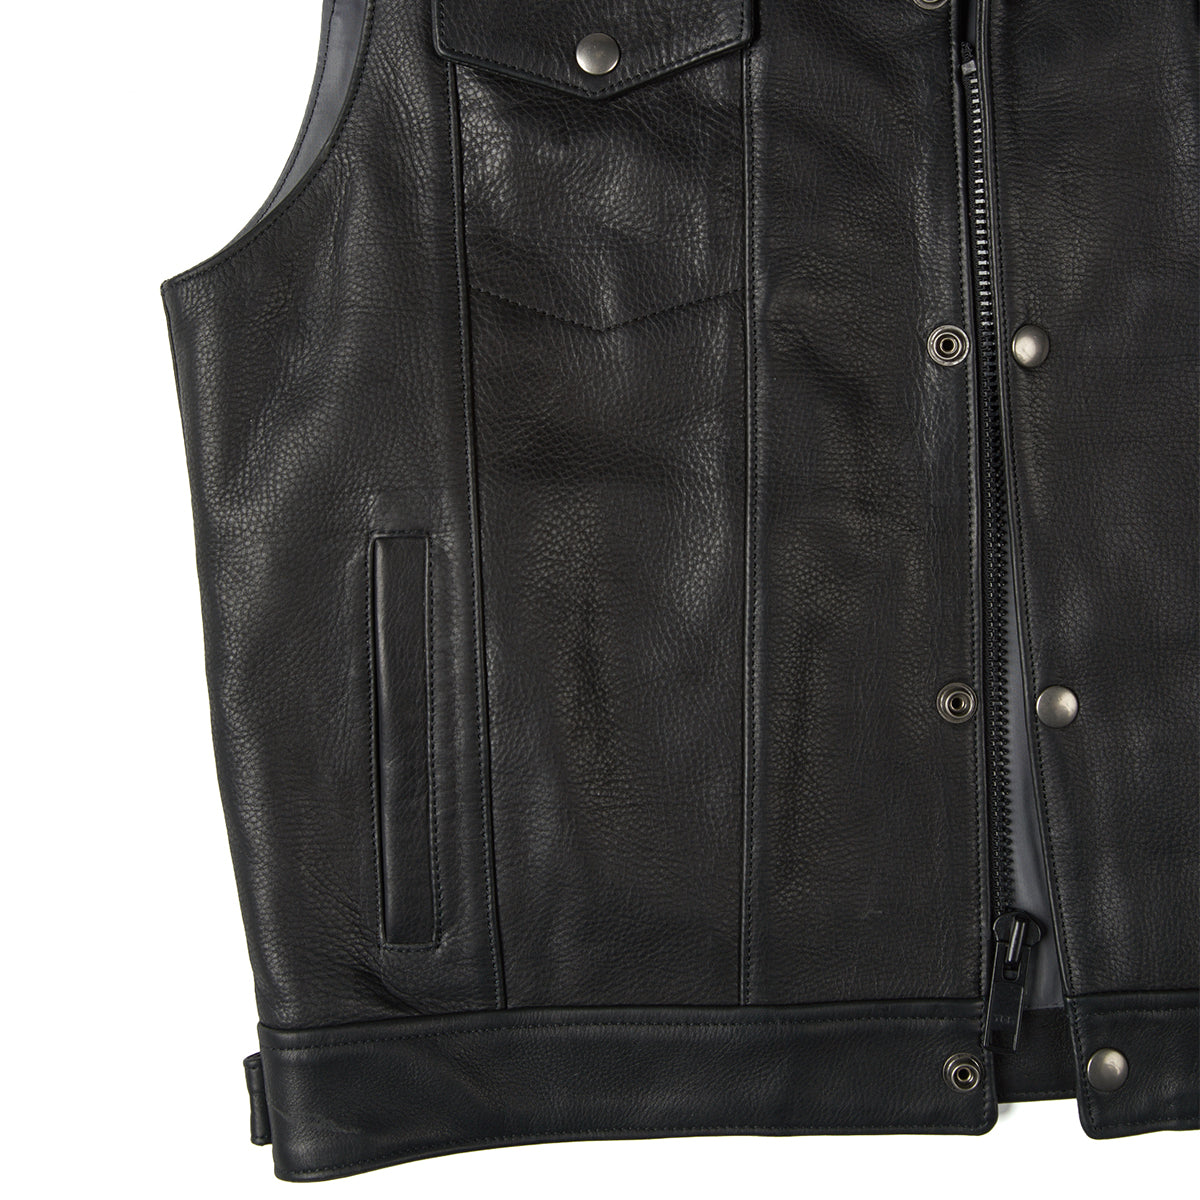 Preston Antiqued Whiskey Vest No.62 — Coronado Leather